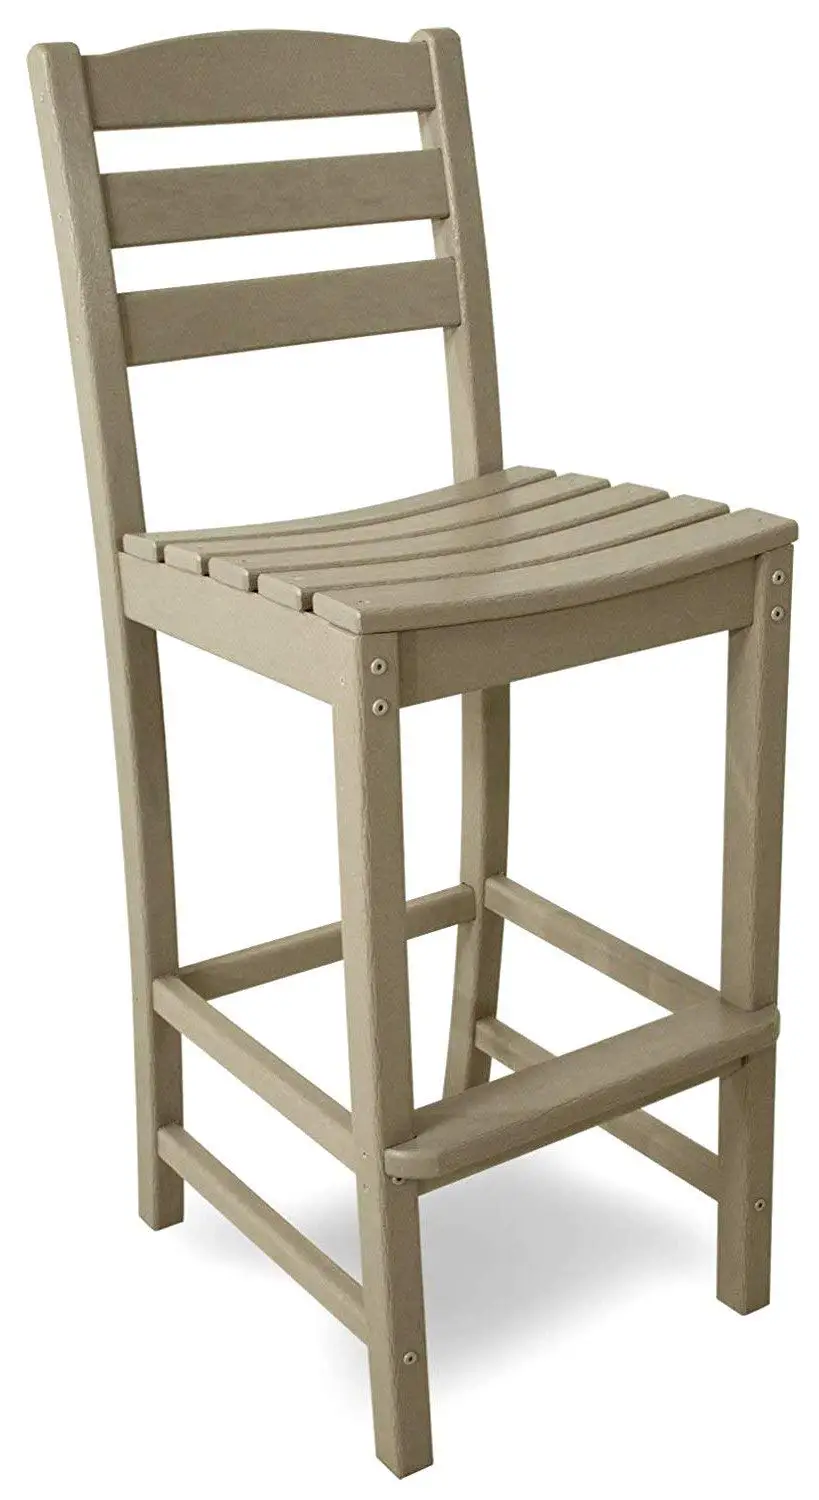 Cheap Bar Height Patio Chair, find Bar Height Patio Chair deals on line